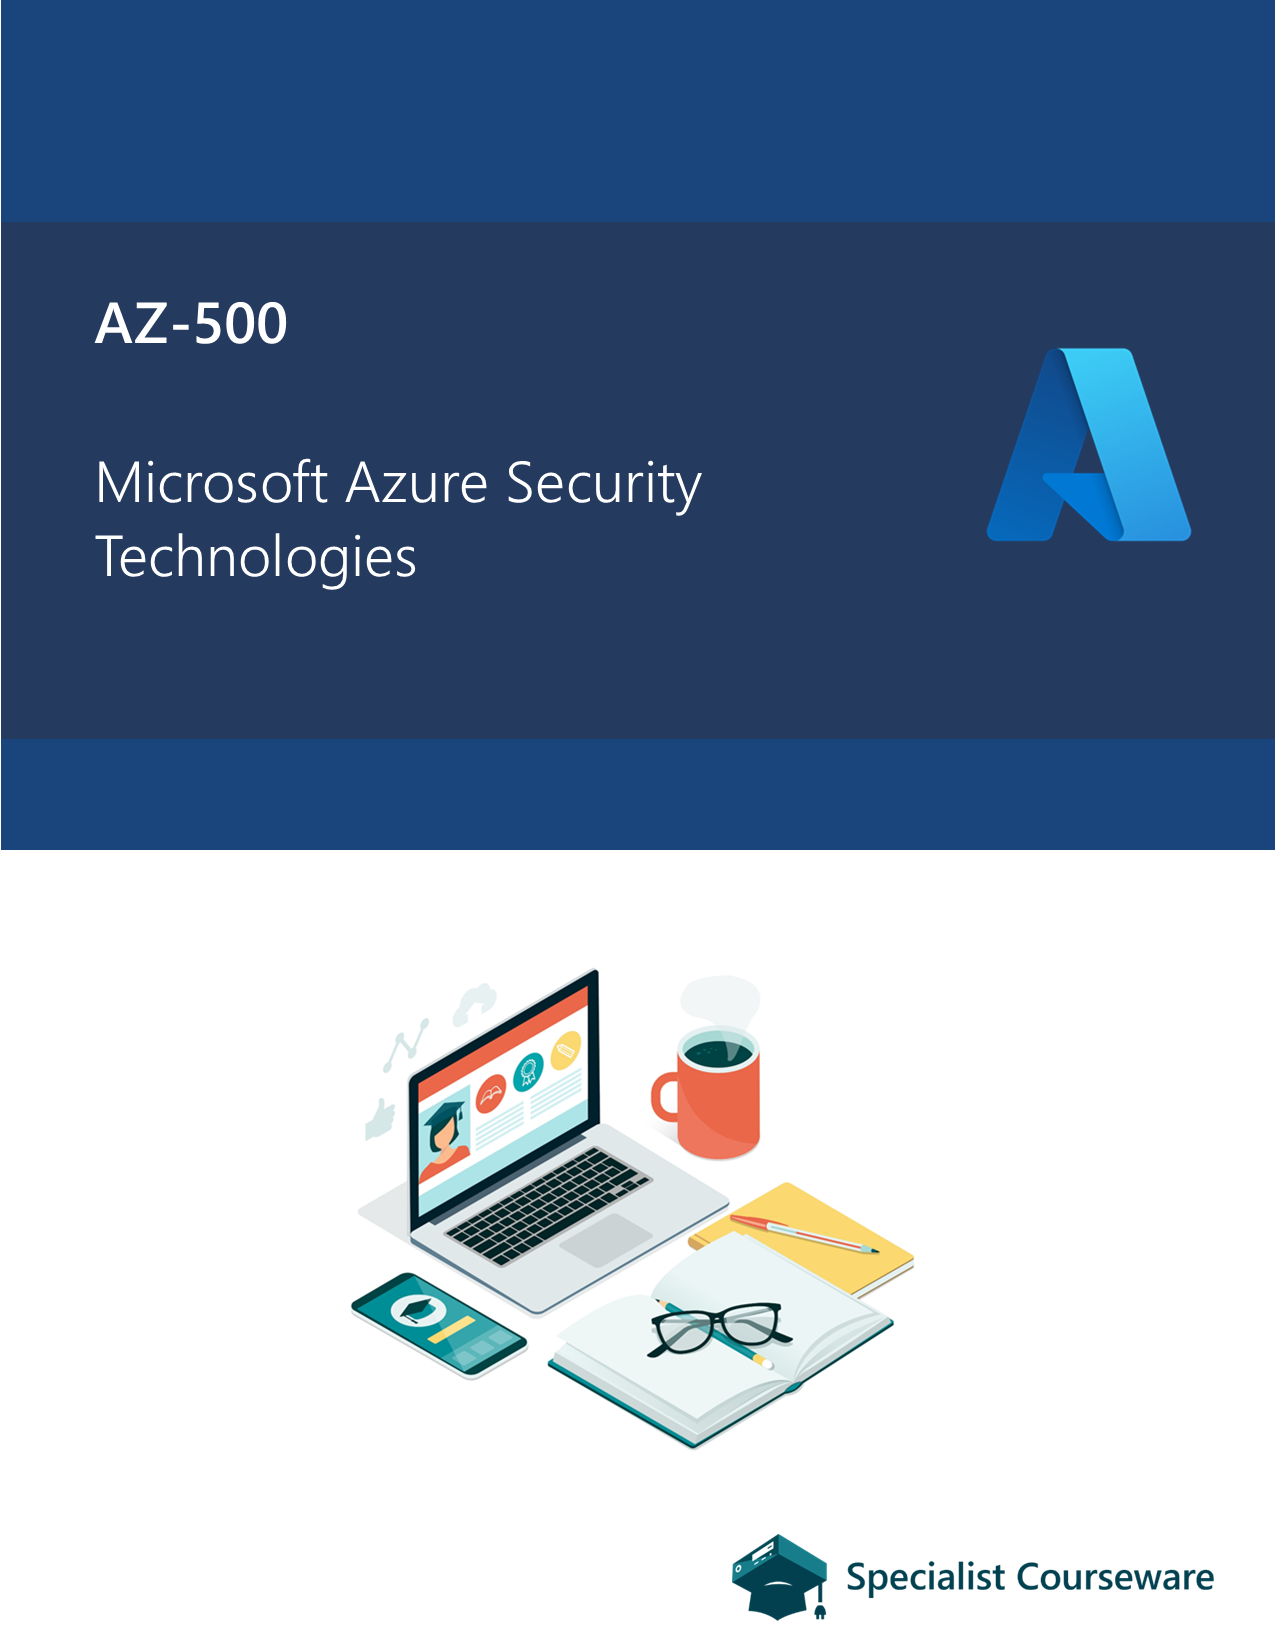 AZ-500 Microsoft Azure Security Technologies (Aligned Courseware)